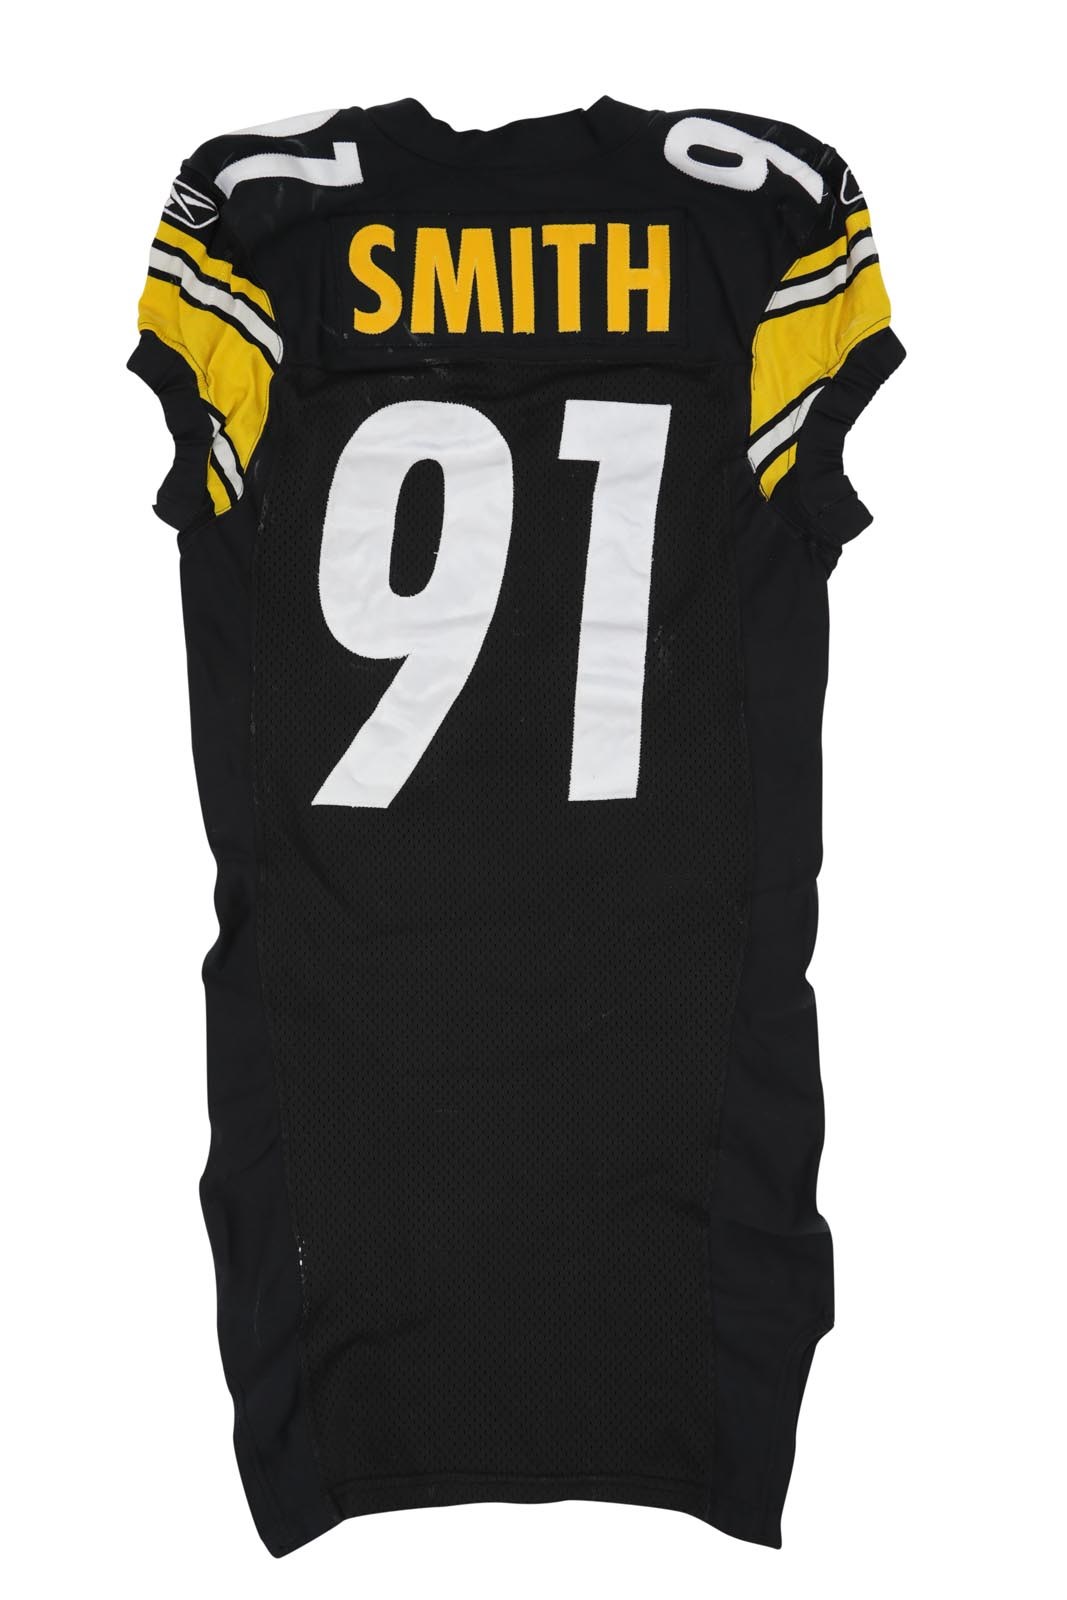 - 2005 Aaron Smith Game Worn Pittsburgh Steelers Jersey (Photo-Matched, Steelers COA)